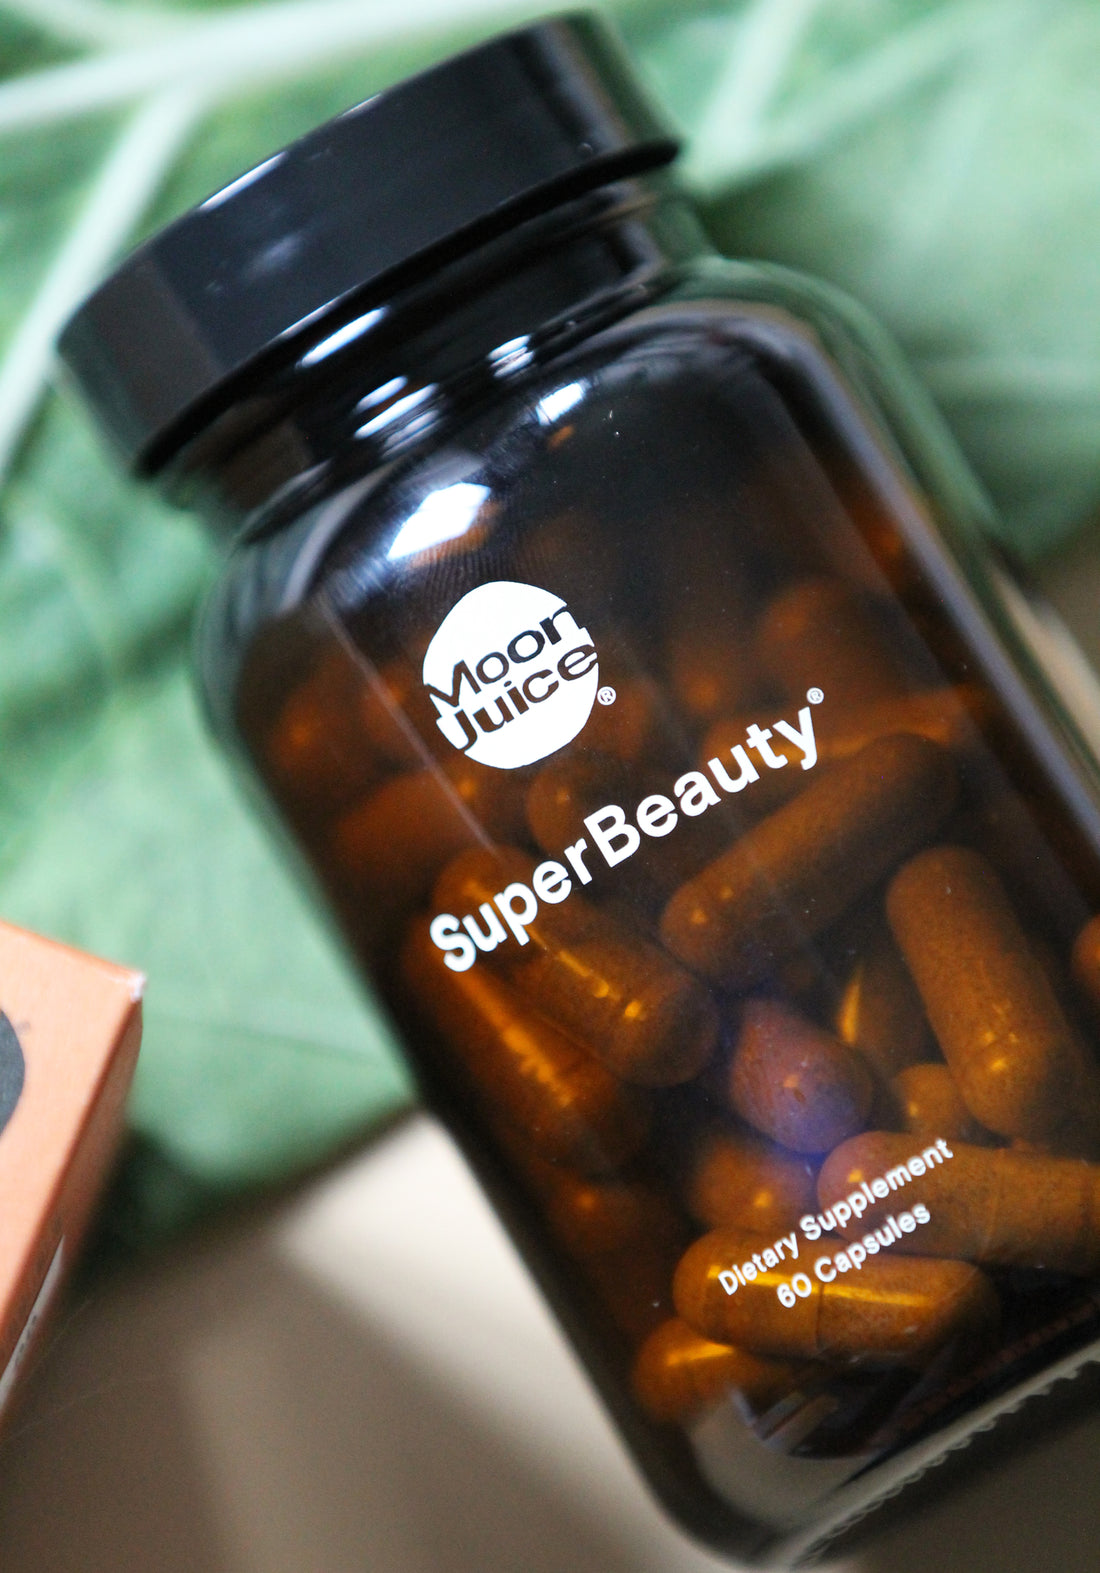 SuperBeauty Supplement